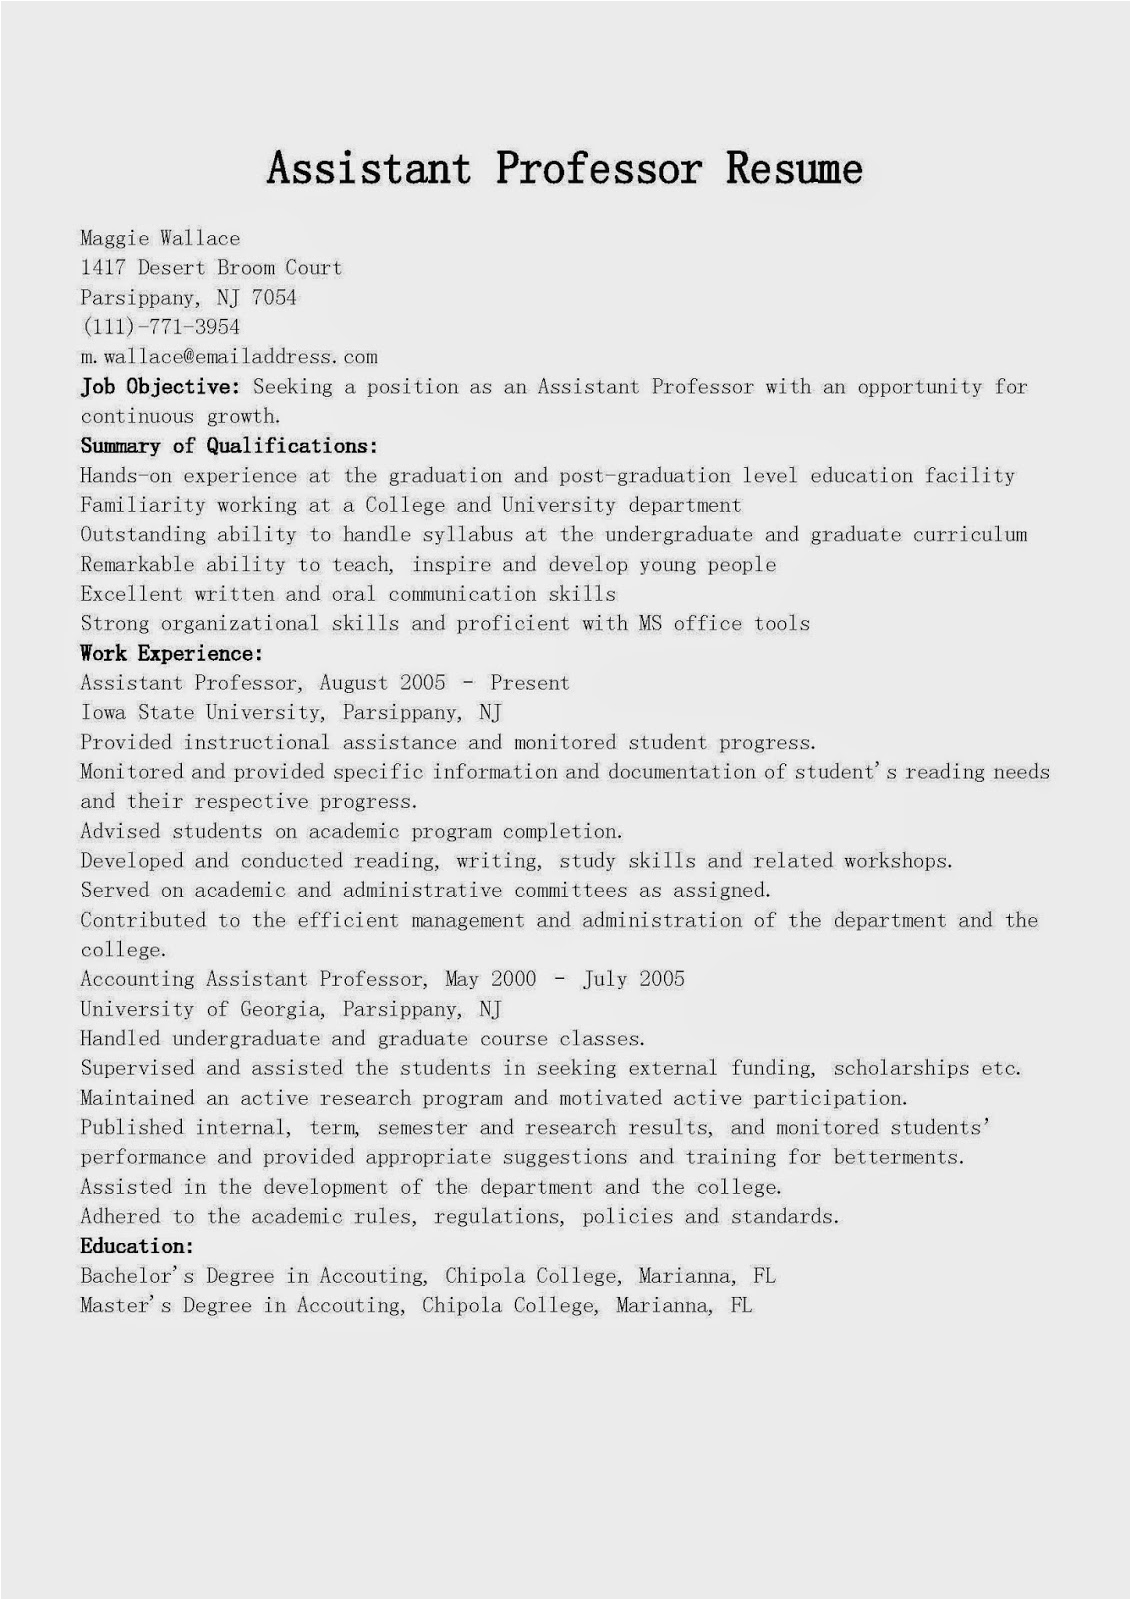 Sample Resume for assistant Professor In Mathematics Resume Samples assistant Professor Resume Sample